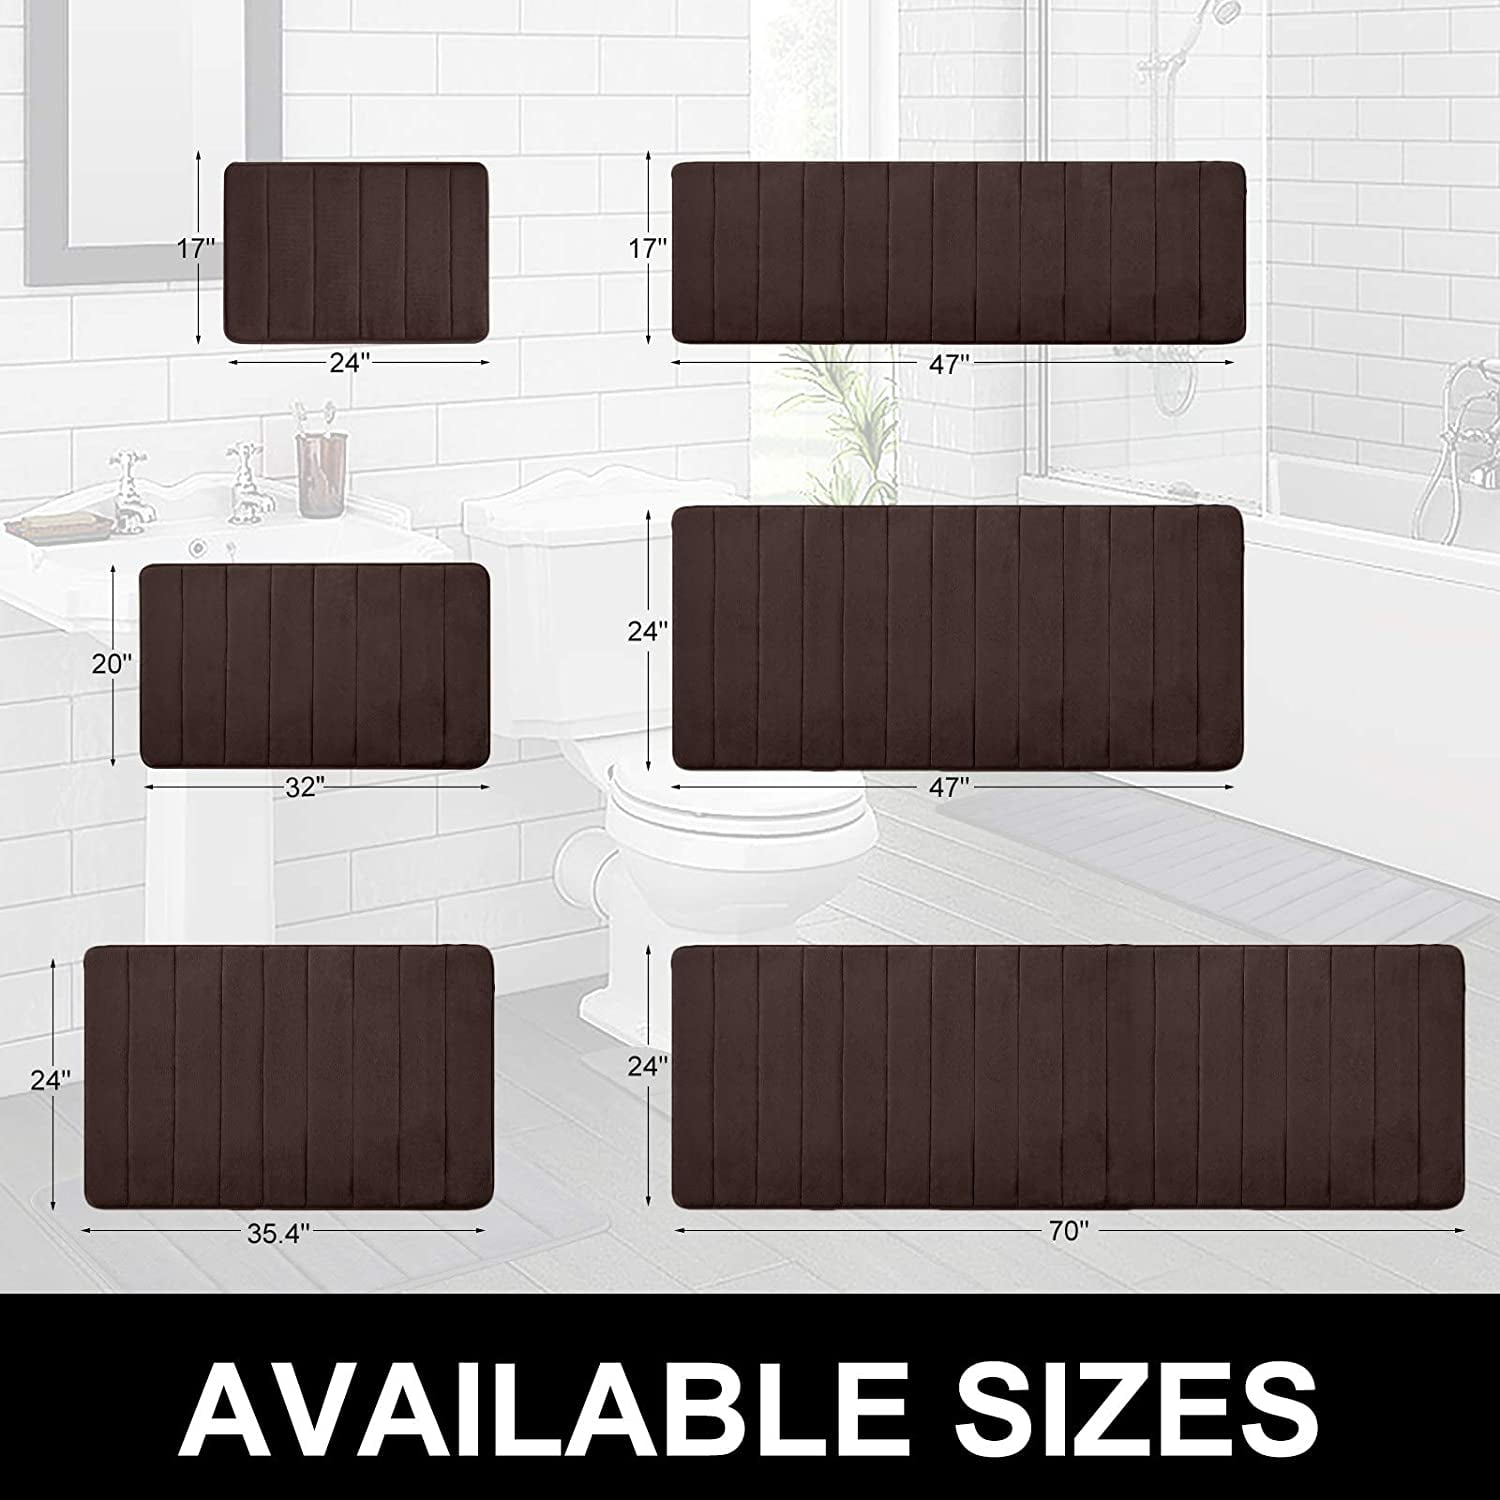 Buganda Memory Foam Bath Mats Soft Absorbent Bathroom Rugs 17 inch x 24 inch, Coffee, Size: 17 x 24, Brown